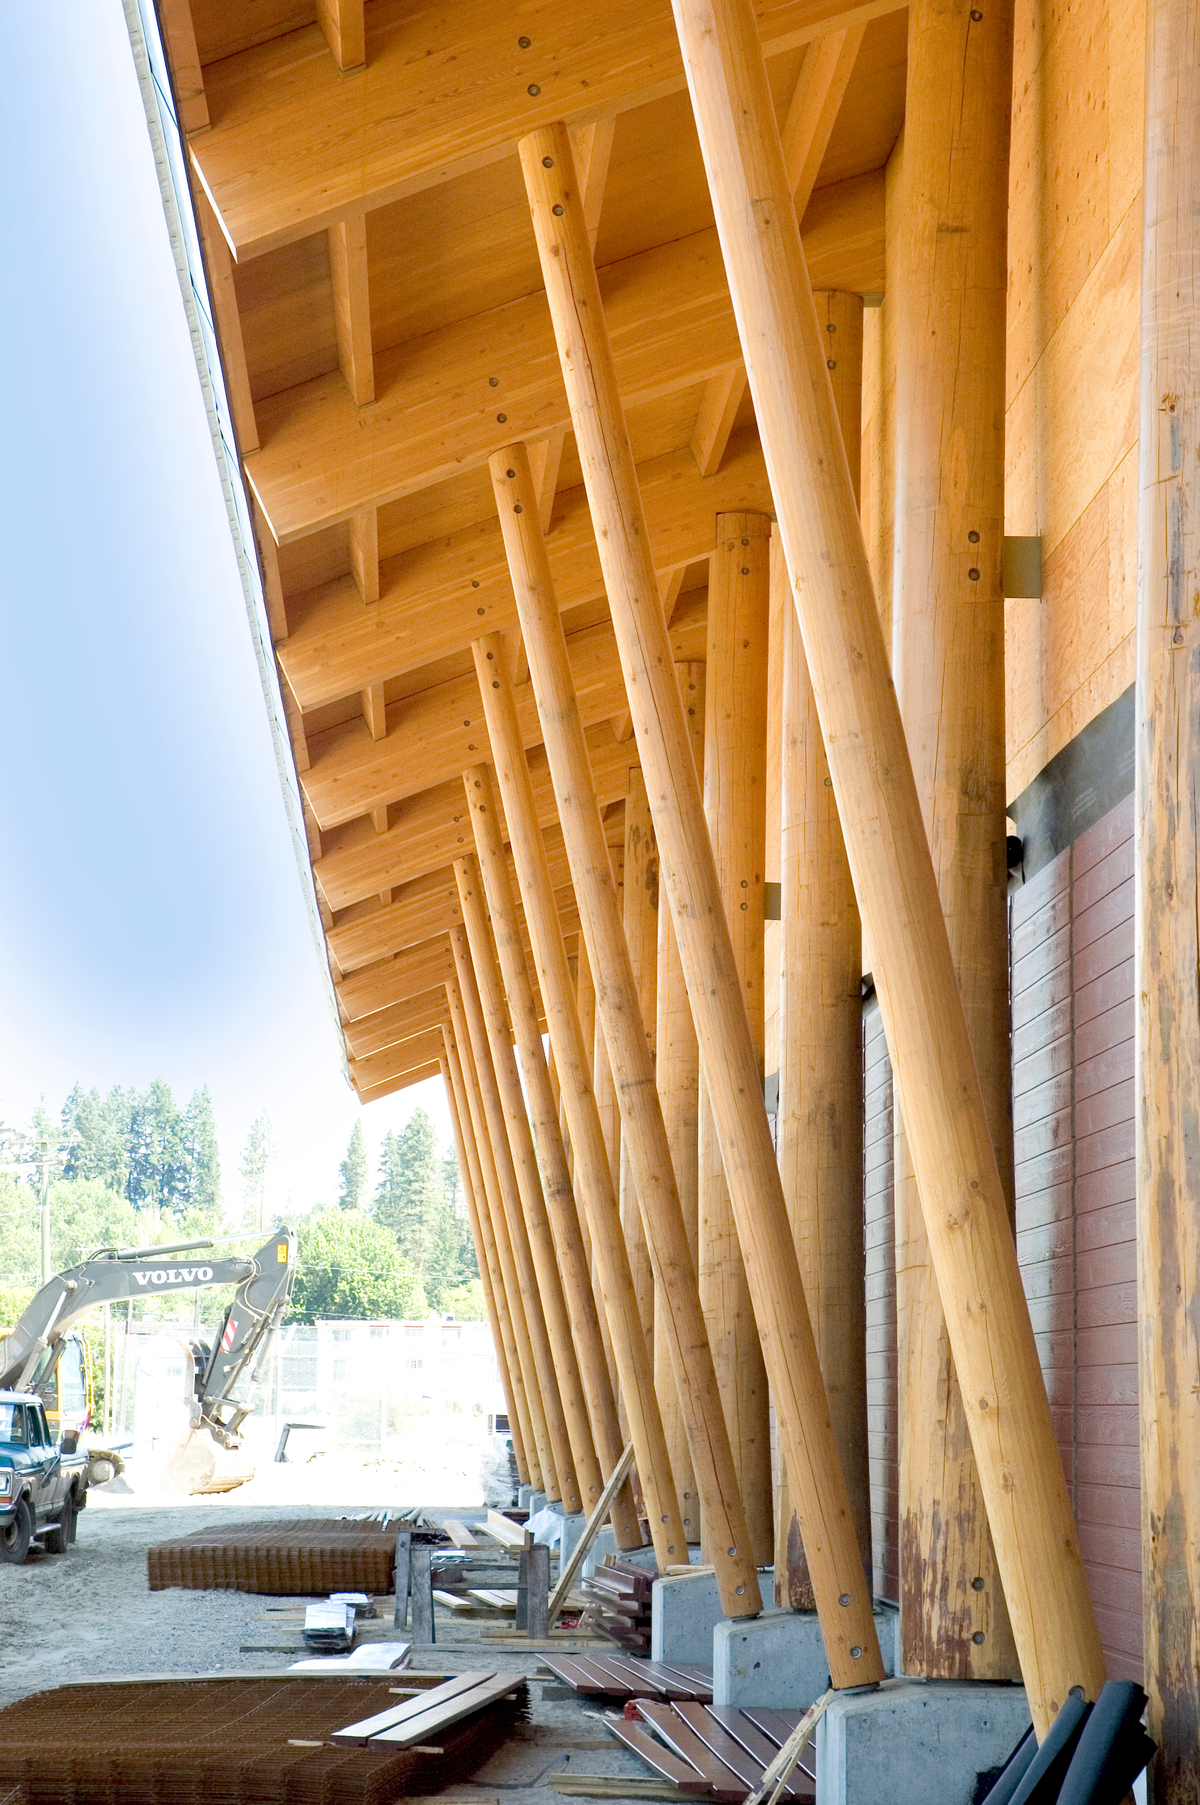 Armstrong-Spallumcheen竞技场活跃建筑的日间外部视图，显示胶合木水平屋面梁和道格拉斯杉木护套的垂直柱子+梁支撑